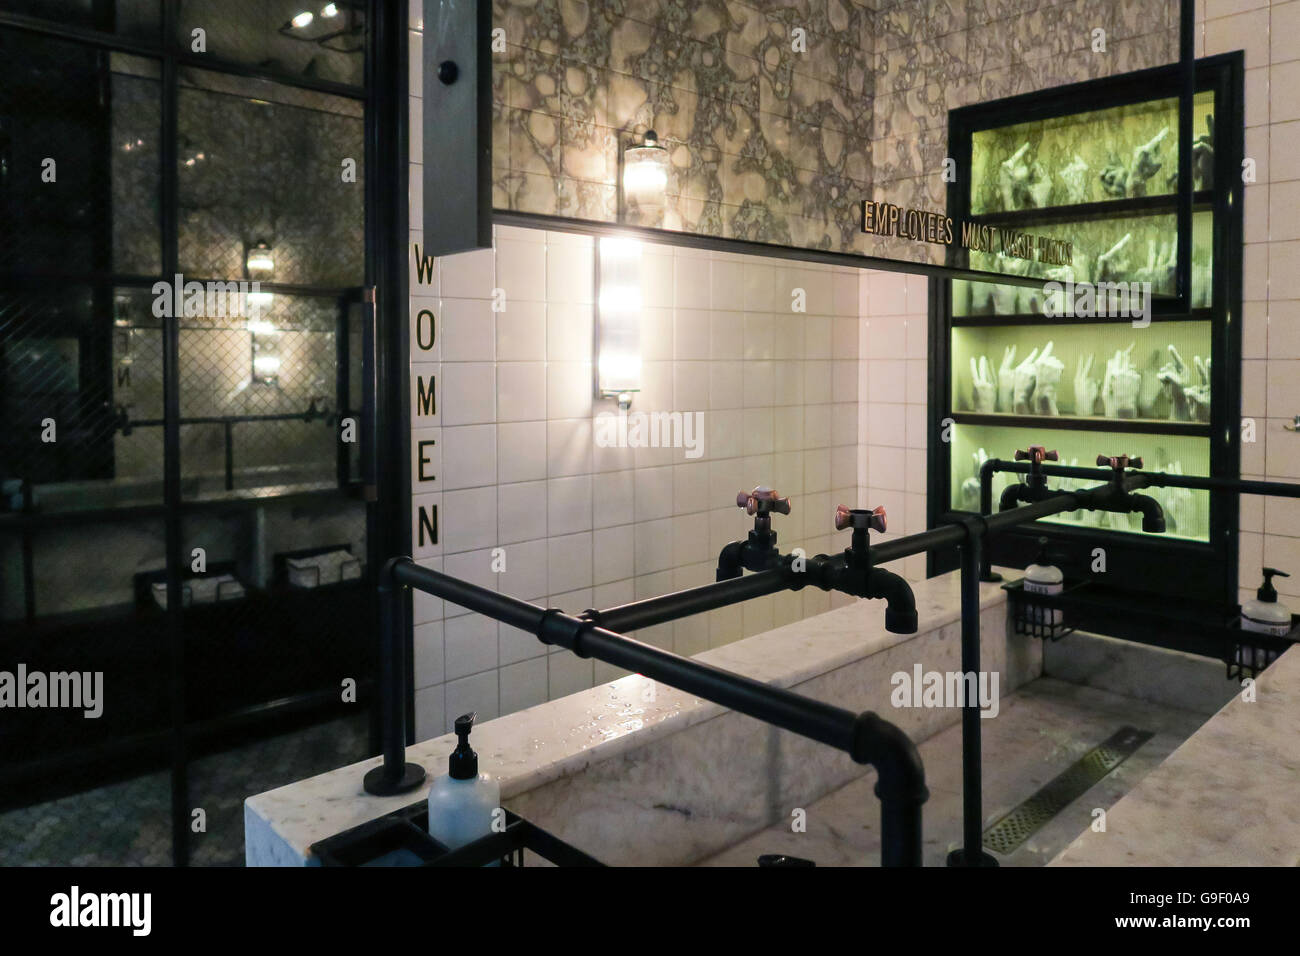 Eventi Hotel Lobby Bathroom Suite, Chelsea, NYC,USA Stock Photo